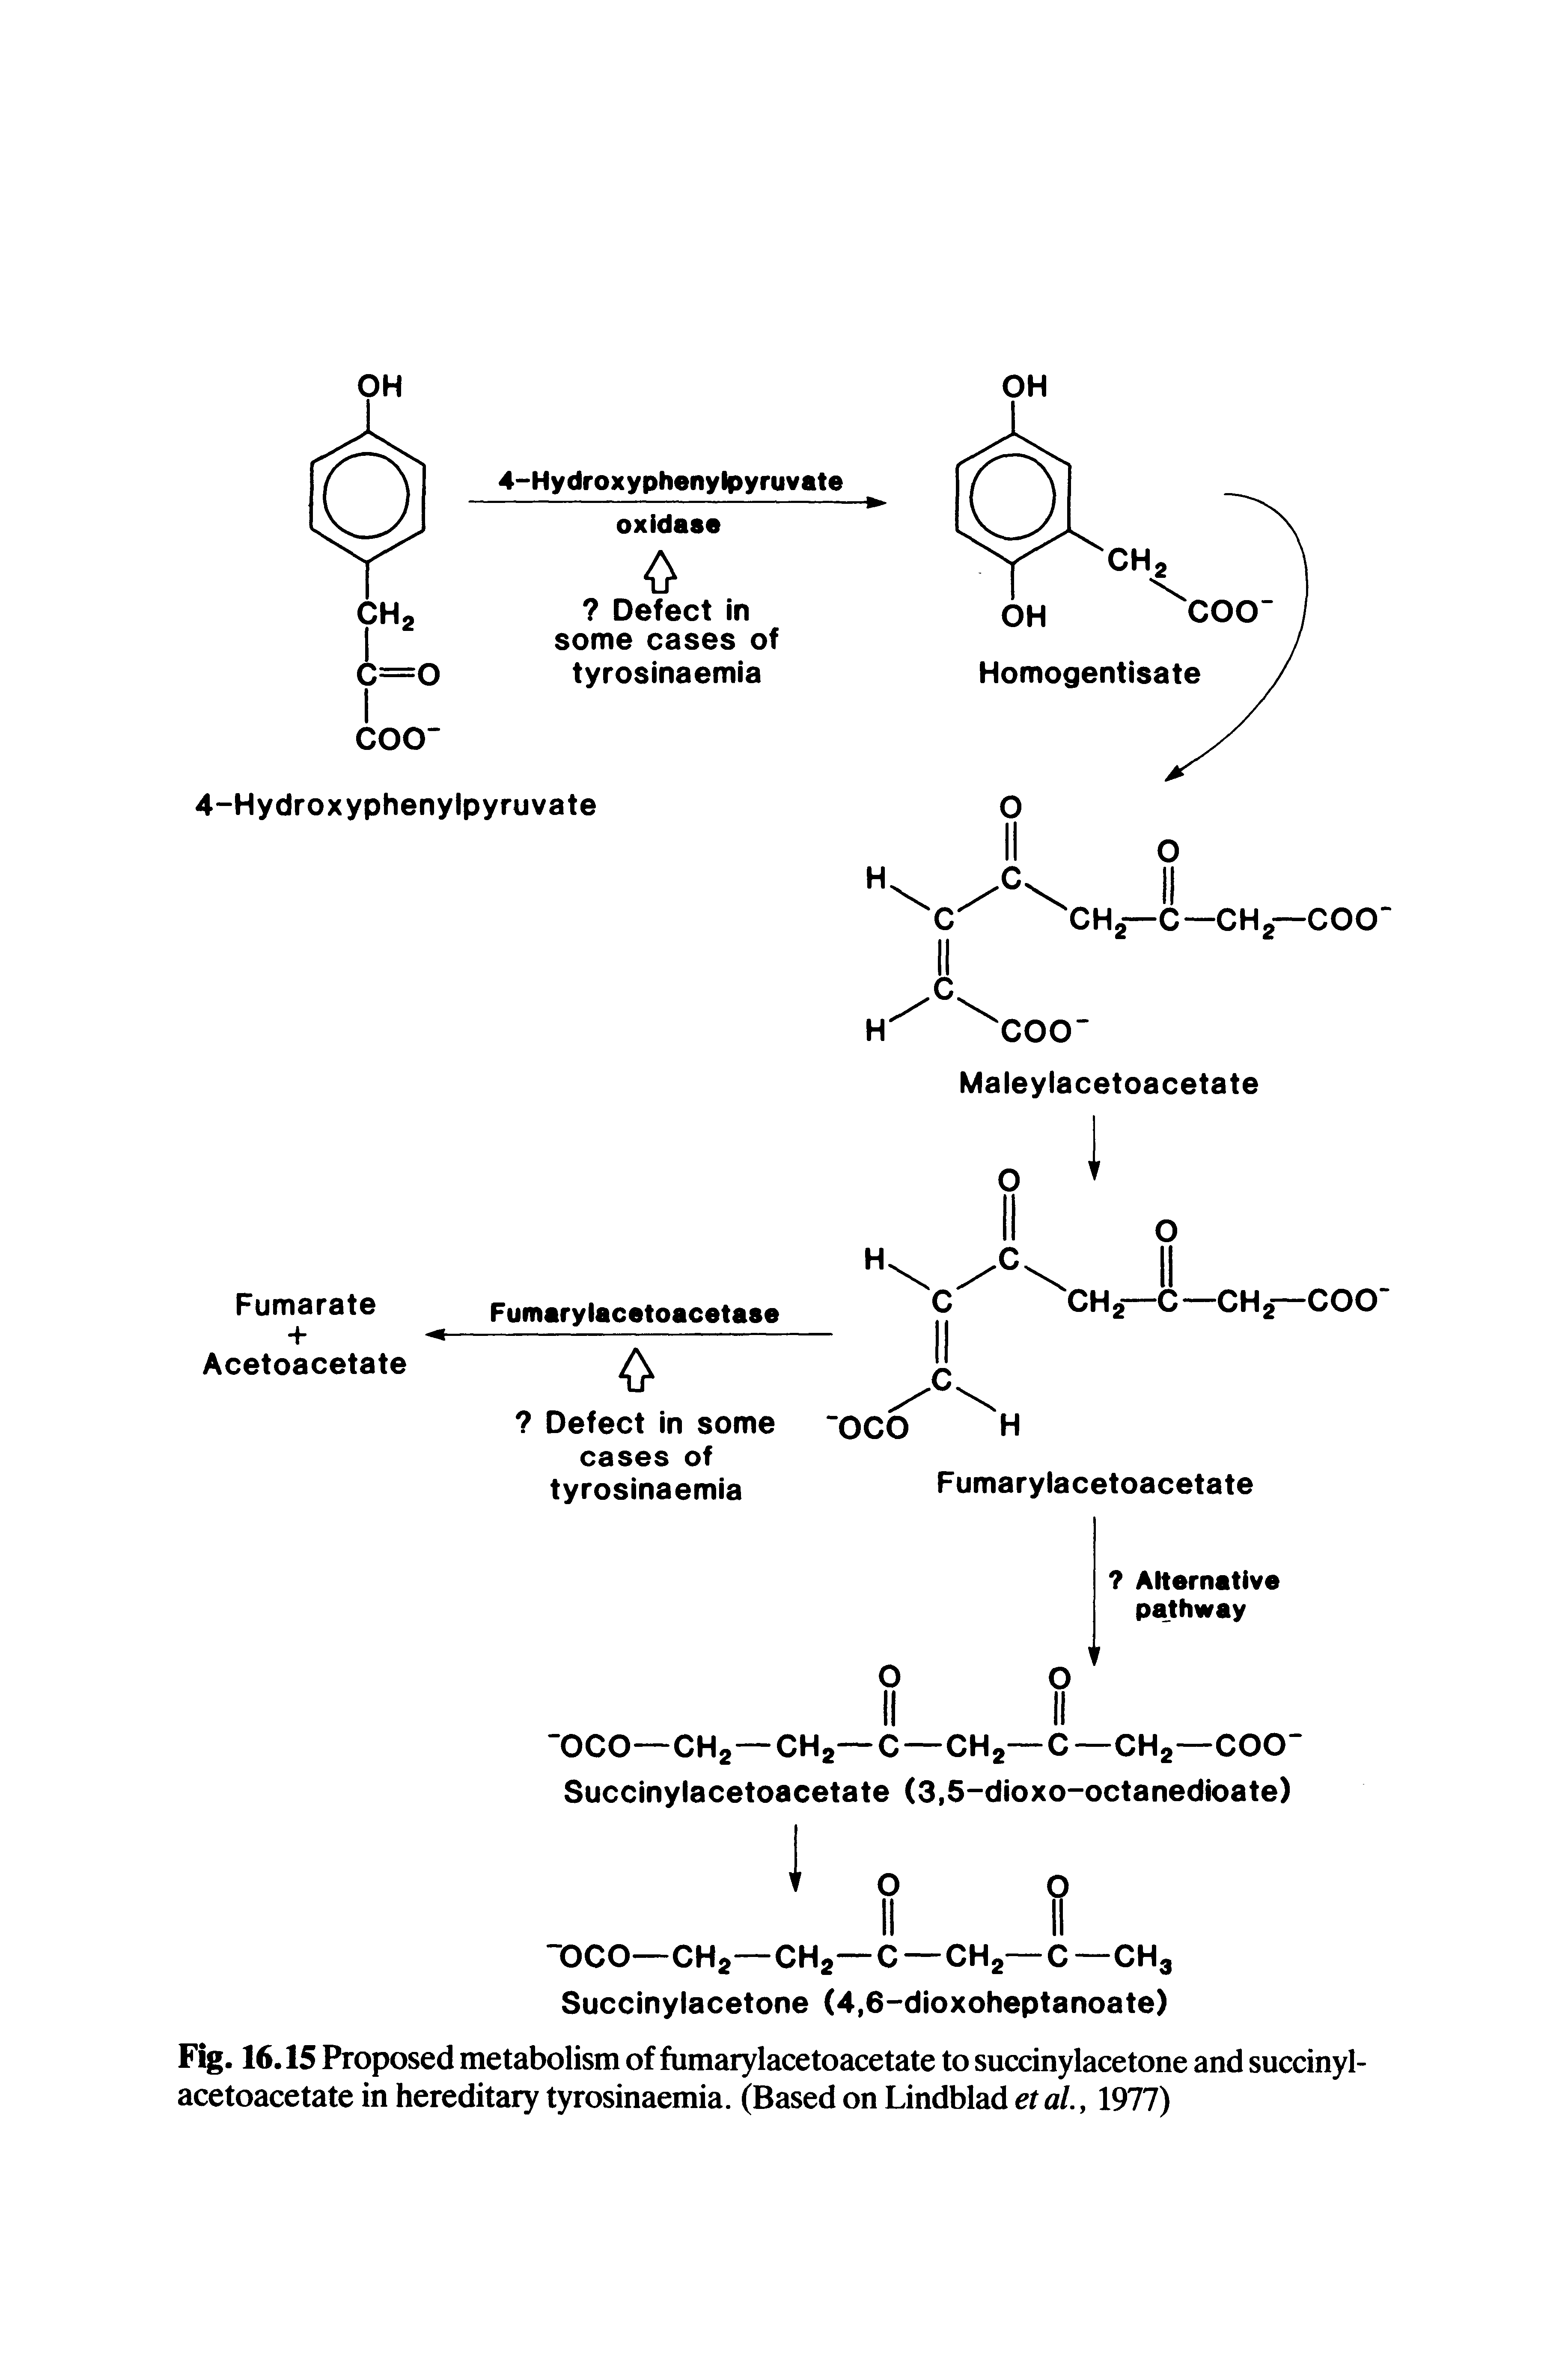 Fig. 16.15 Proposed metabolism of fumarylacetoacetate to succinylacetone and succinylacetoacetate in hereditary tyrosinaemia. (Based on Lindblad etal.y 1977)...